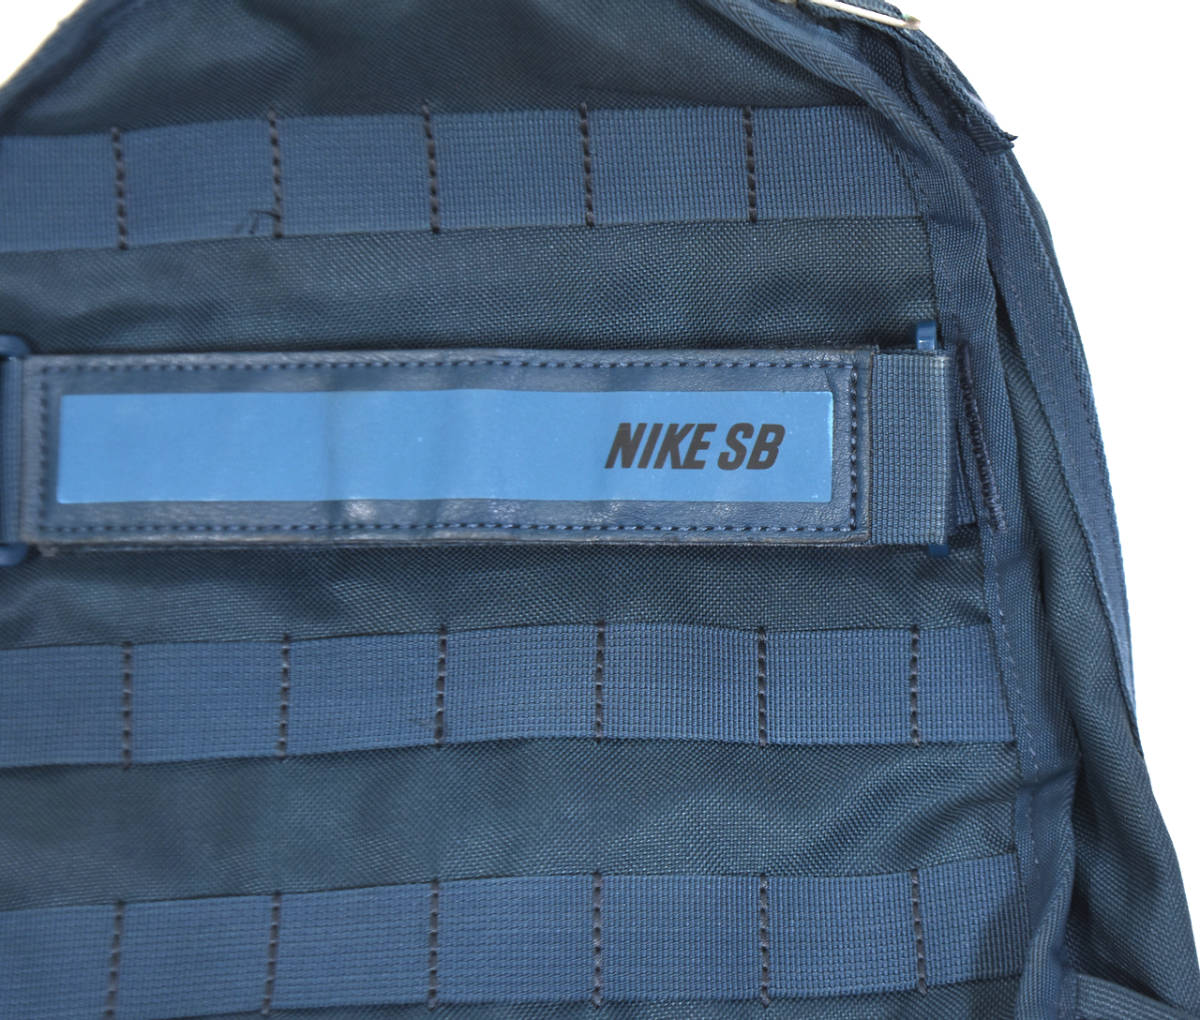 NIKE SKATE BOARD Nike skateboard rucksack backpack navy 